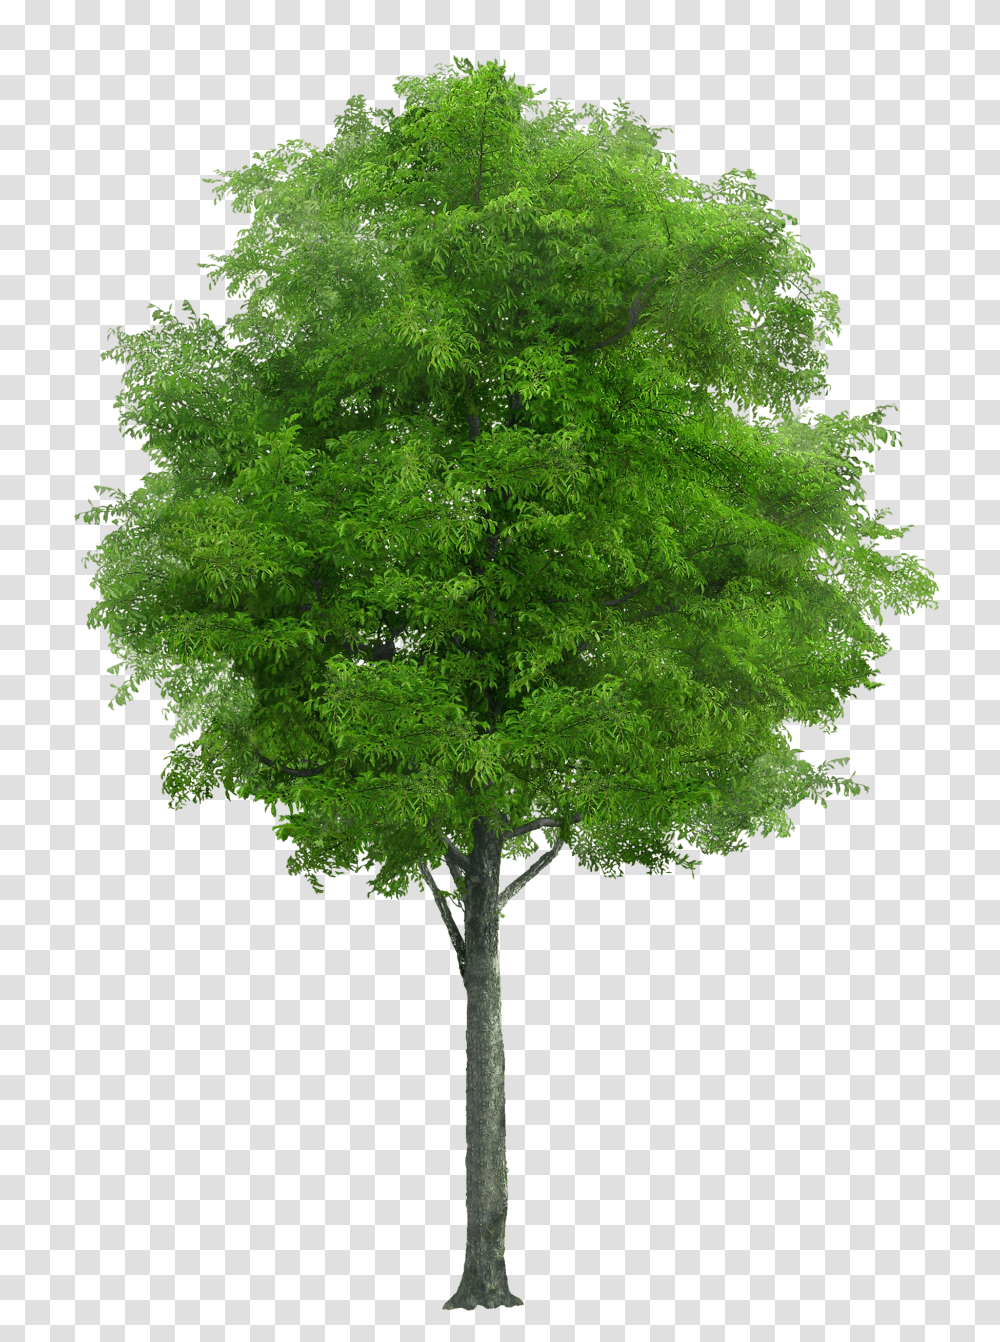 Treenatureforesttrunkvegetation Free Image From Trees For Photoshop, Plant, Cross, Symbol, Maple Transparent Png